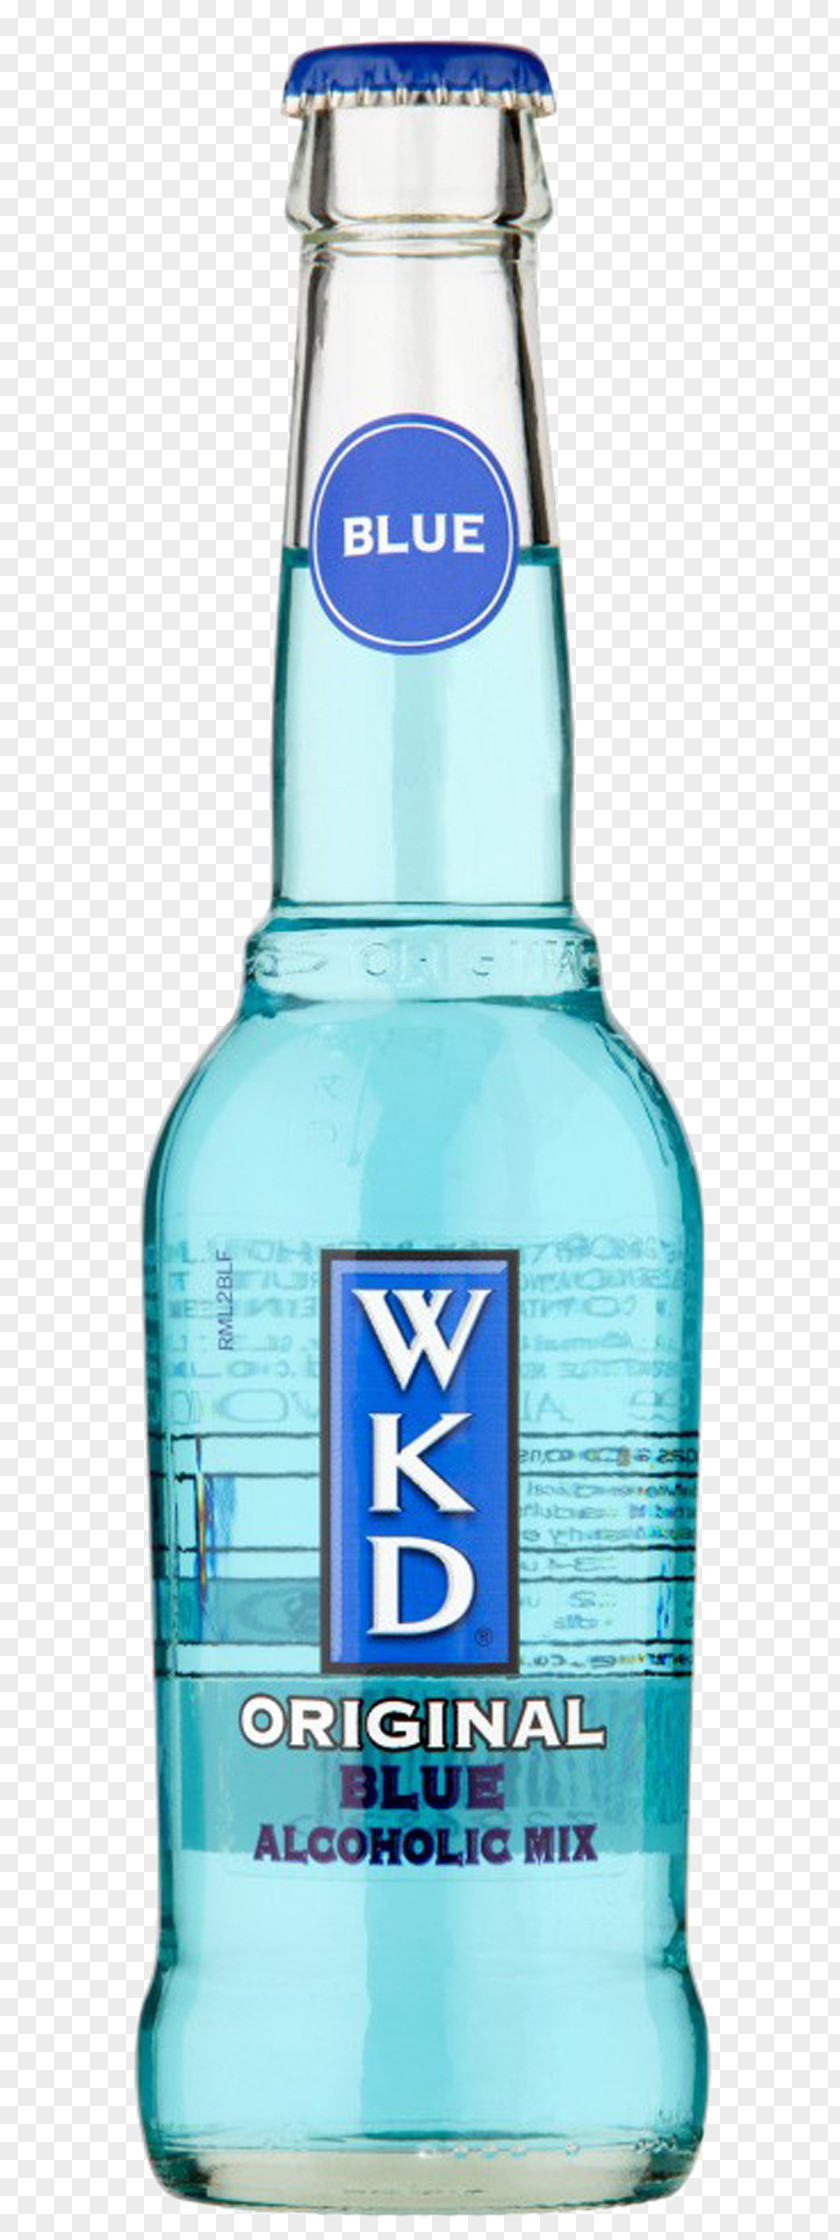 Vodka WKD Original Distilled Beverage Wine Beer PNG